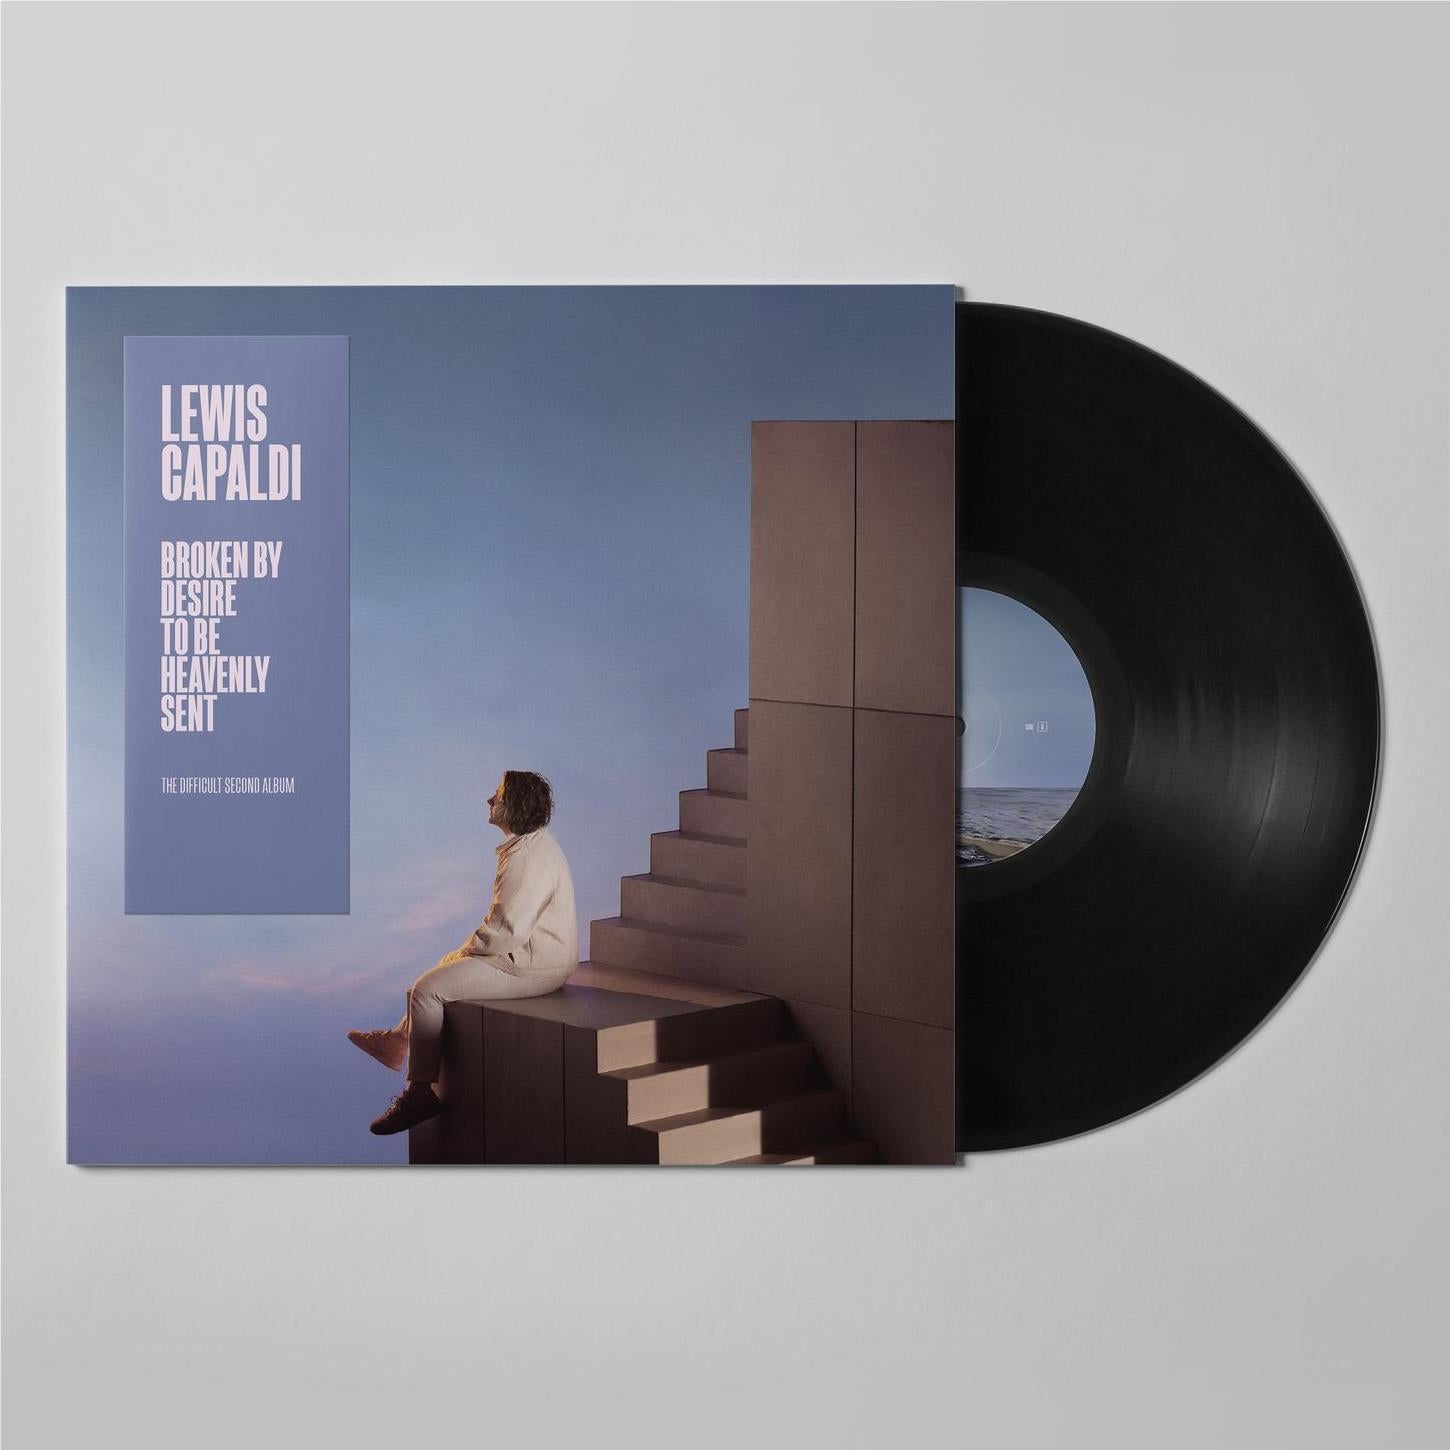 LACY,STEVE - GEMINI RIGHTS Vinyl LP